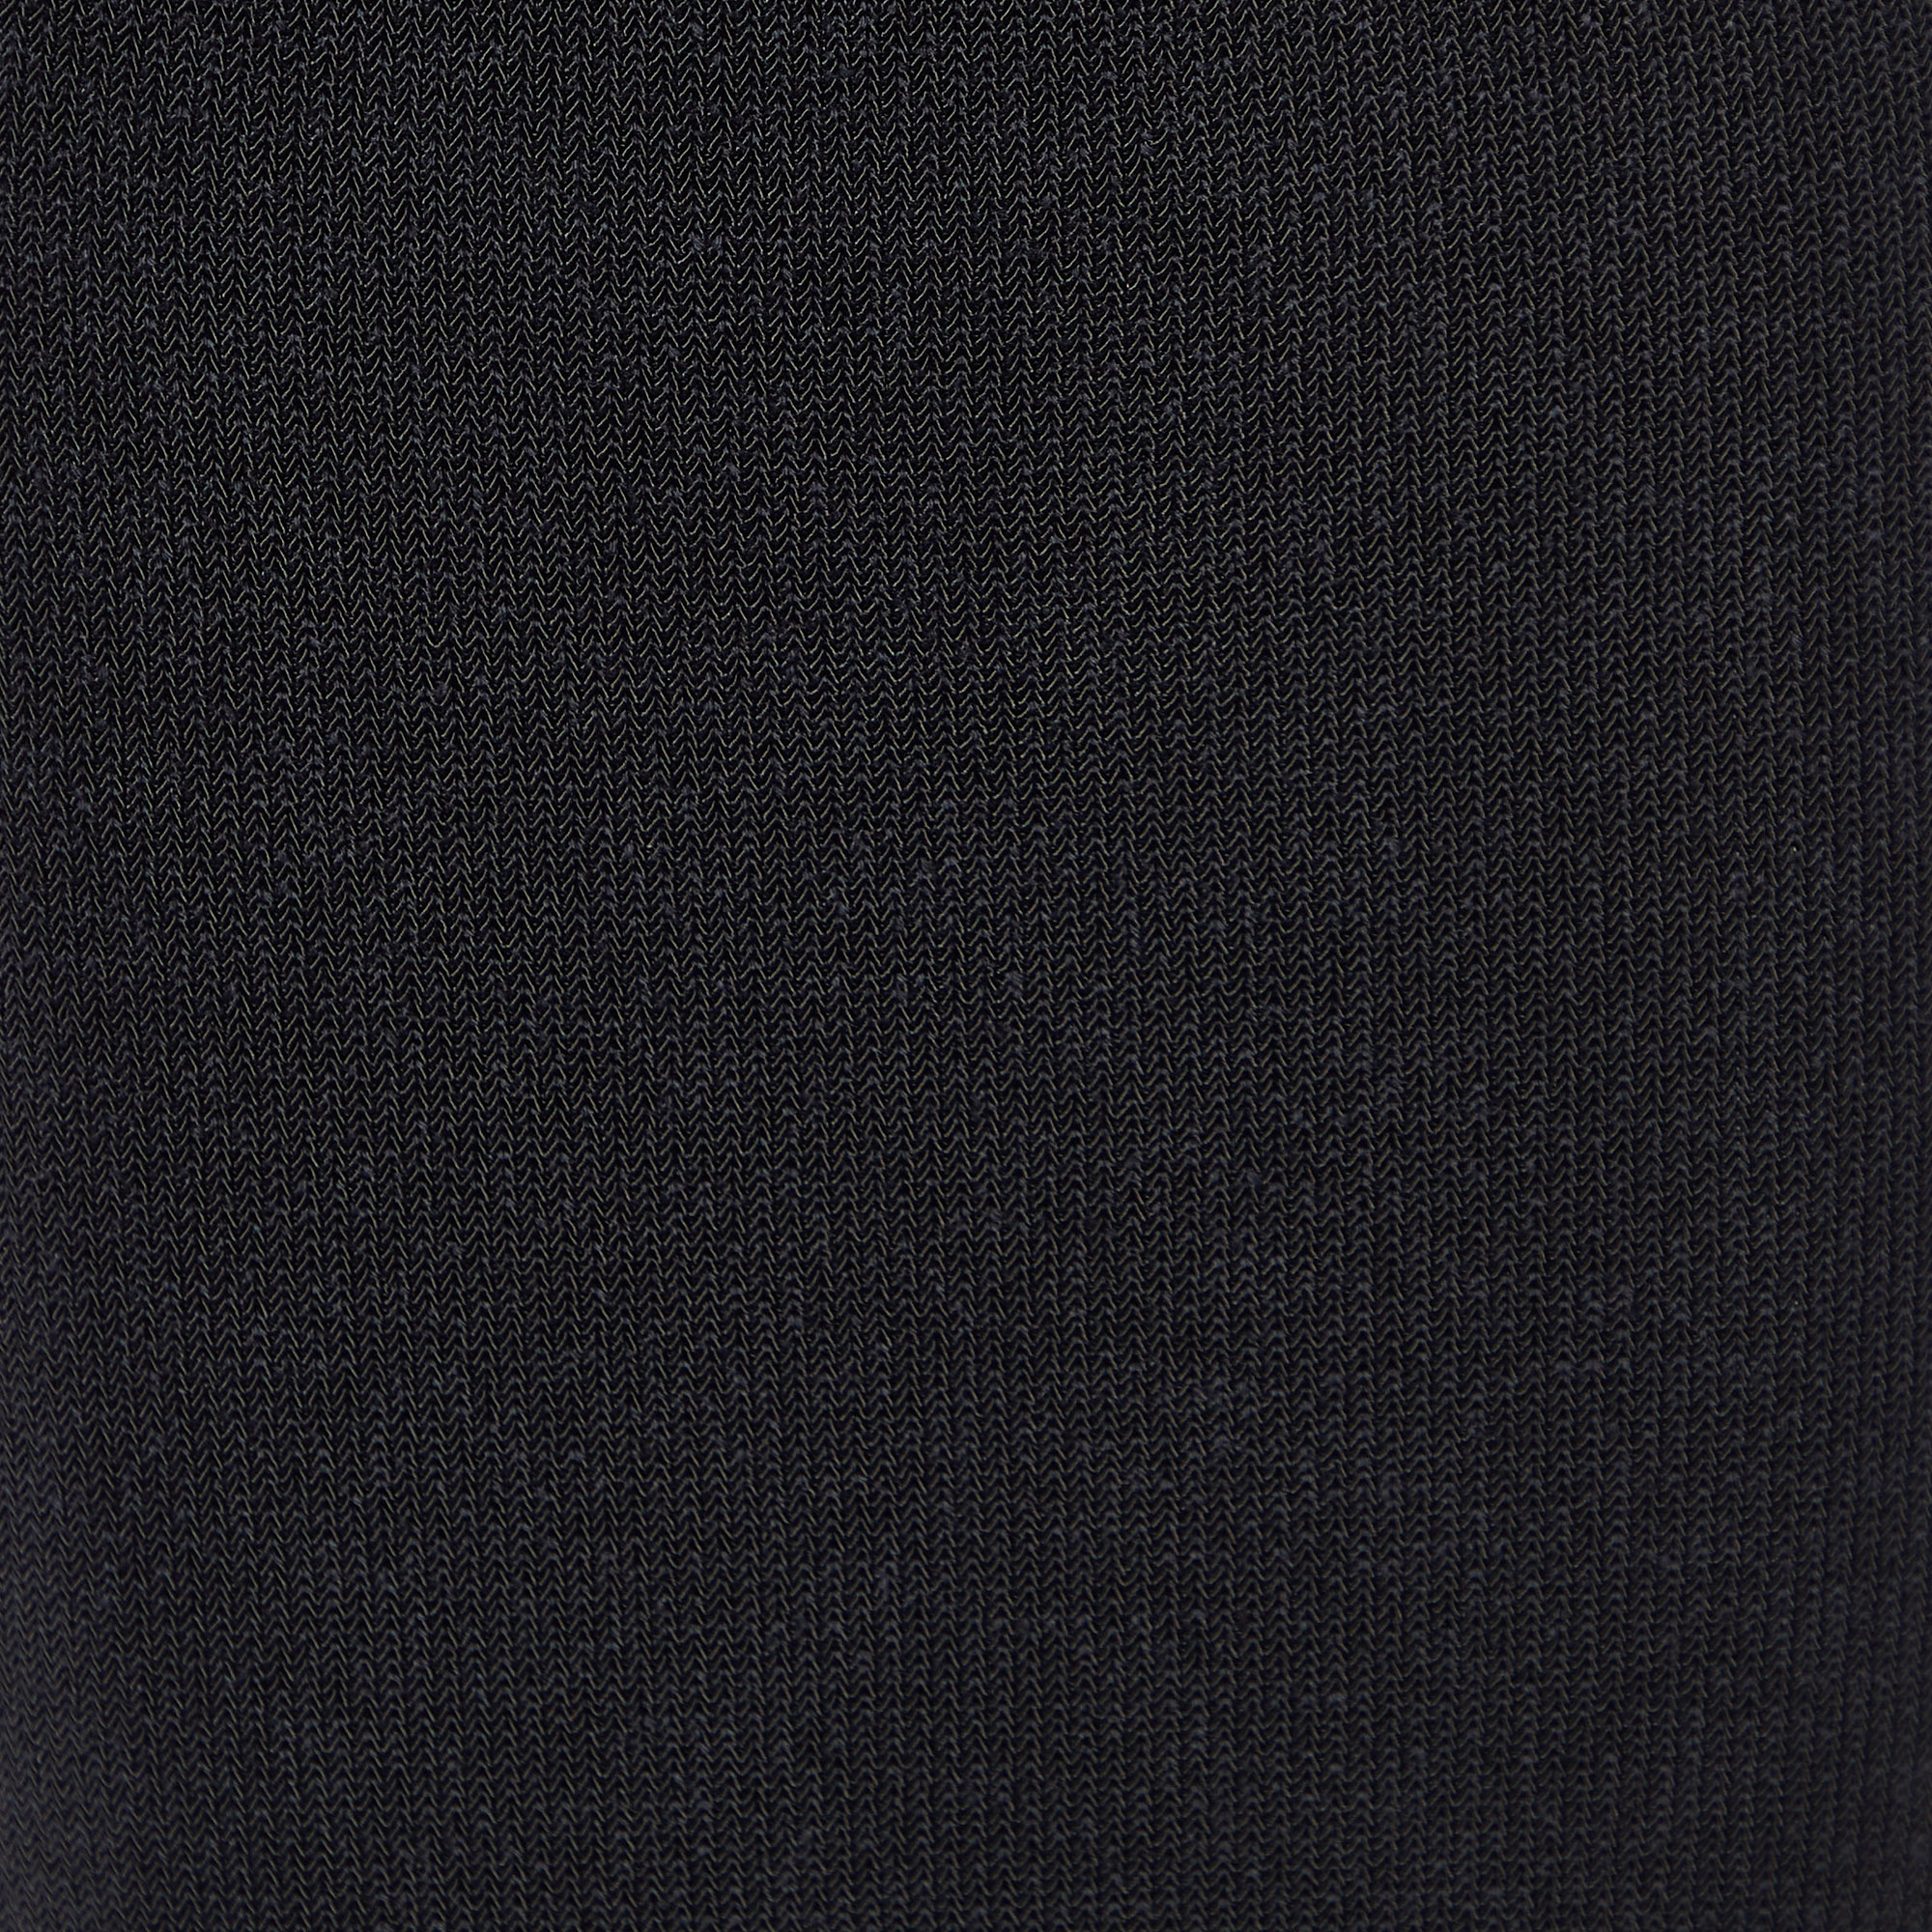 Sportmax Black Cotton Blend Knit Midi Skirt M